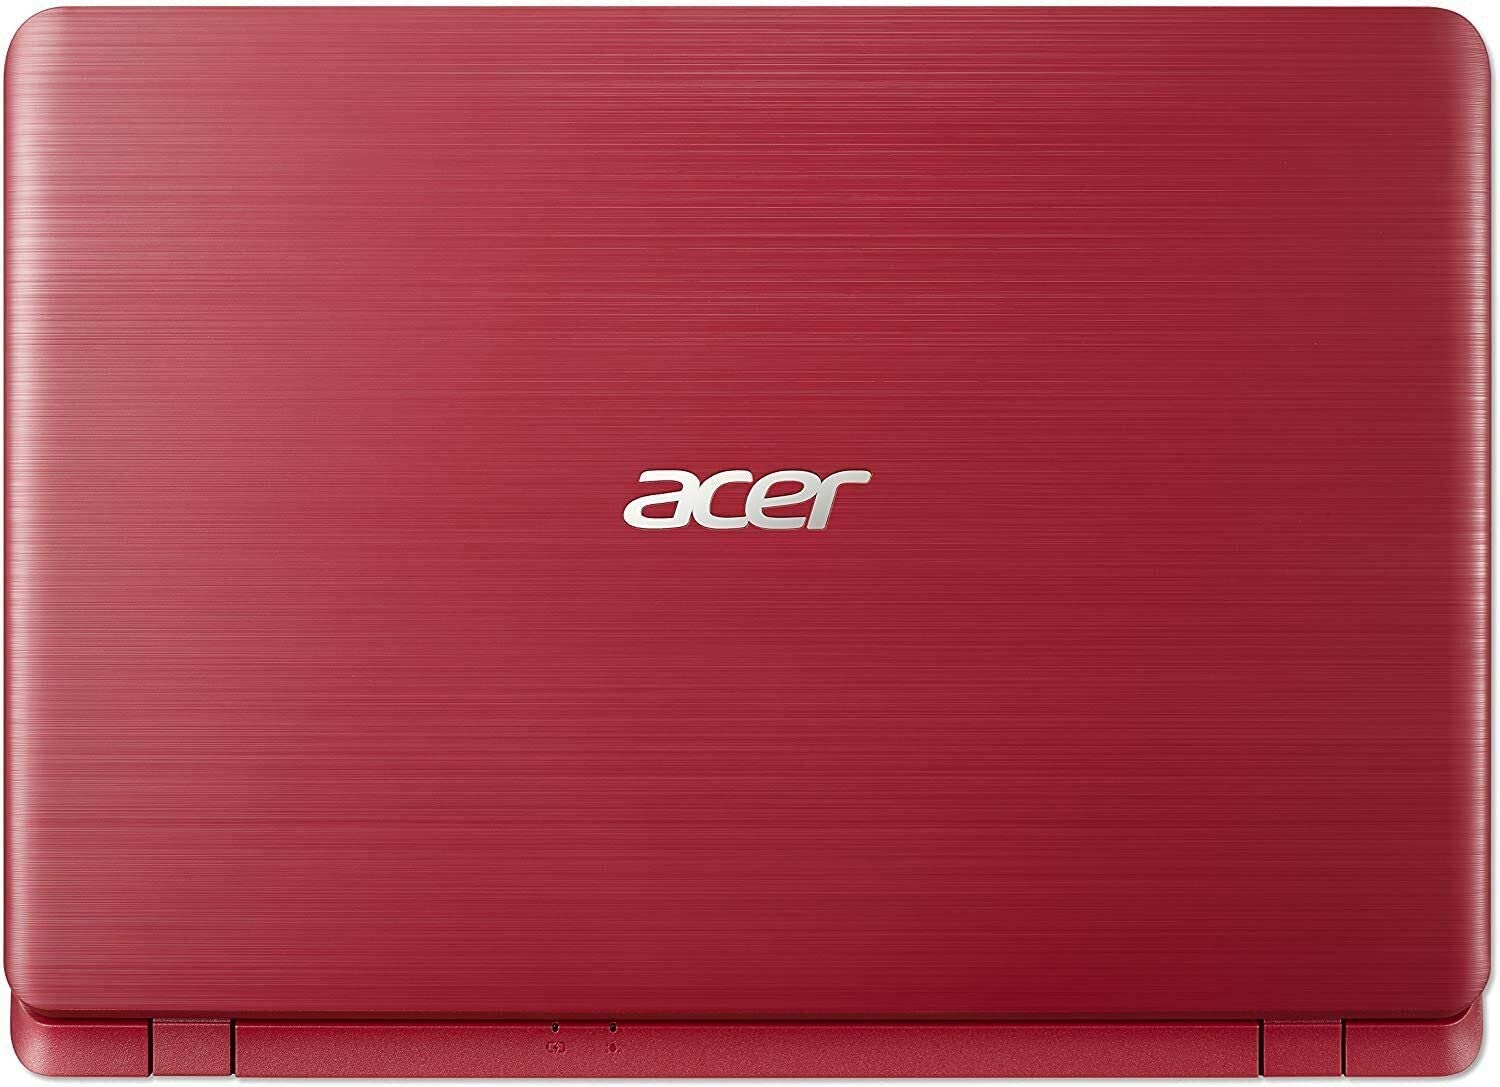 Acer Aspire 1 A111-31 - Celeron N4000 · UHD Graphics 600 · 11.6